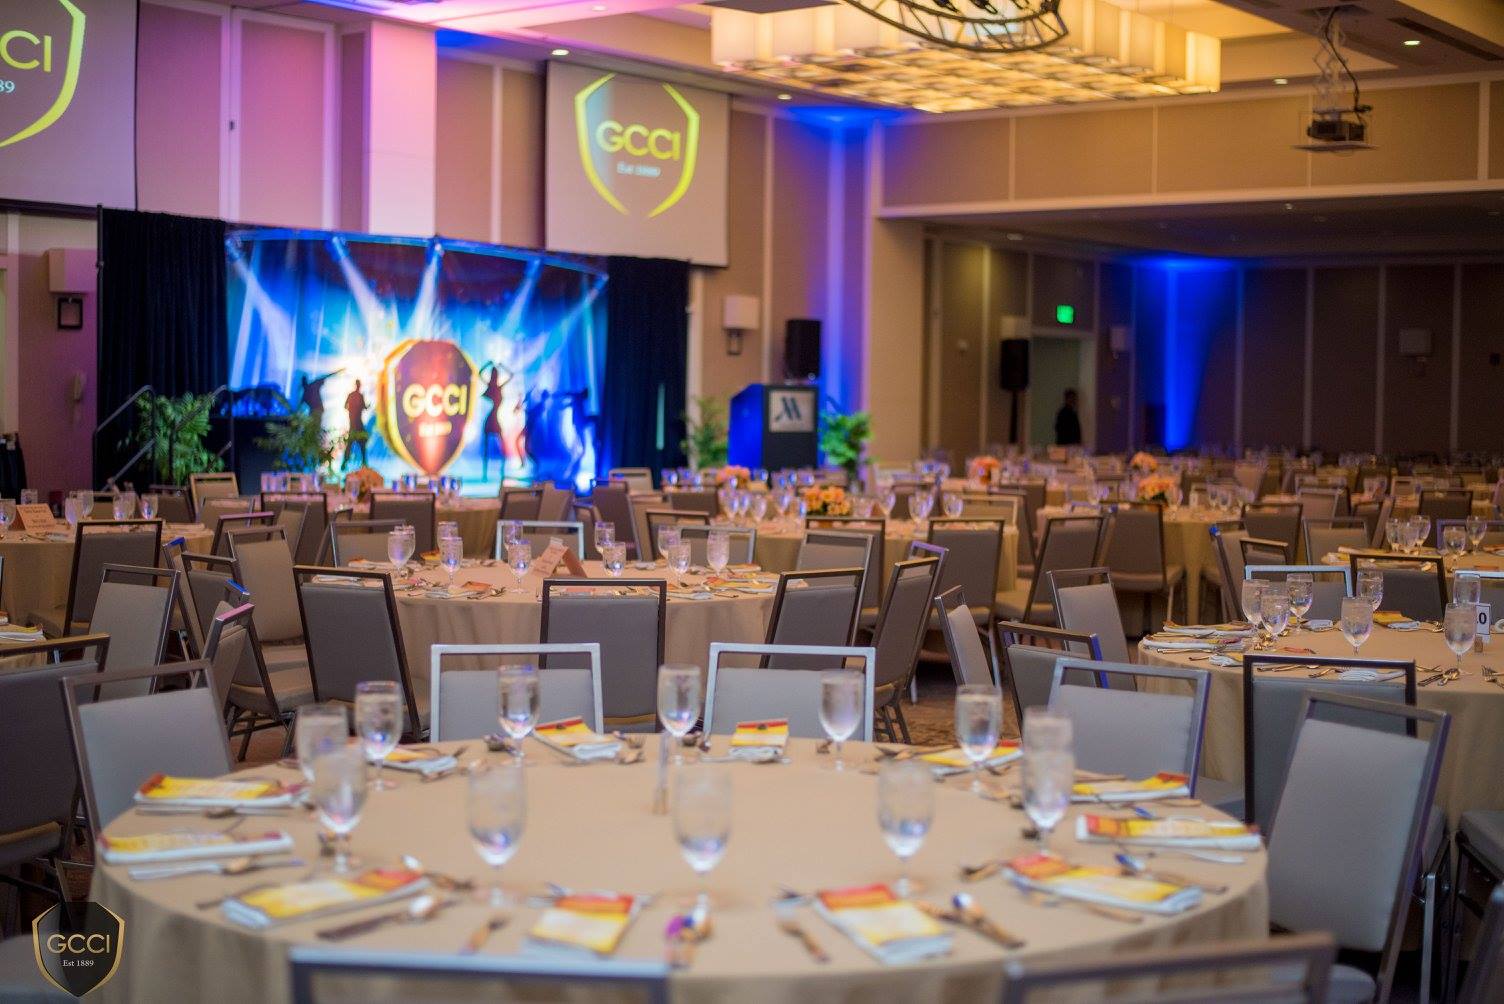 GCCI’s 128th Annual Awards Presentation & Gala Dinner